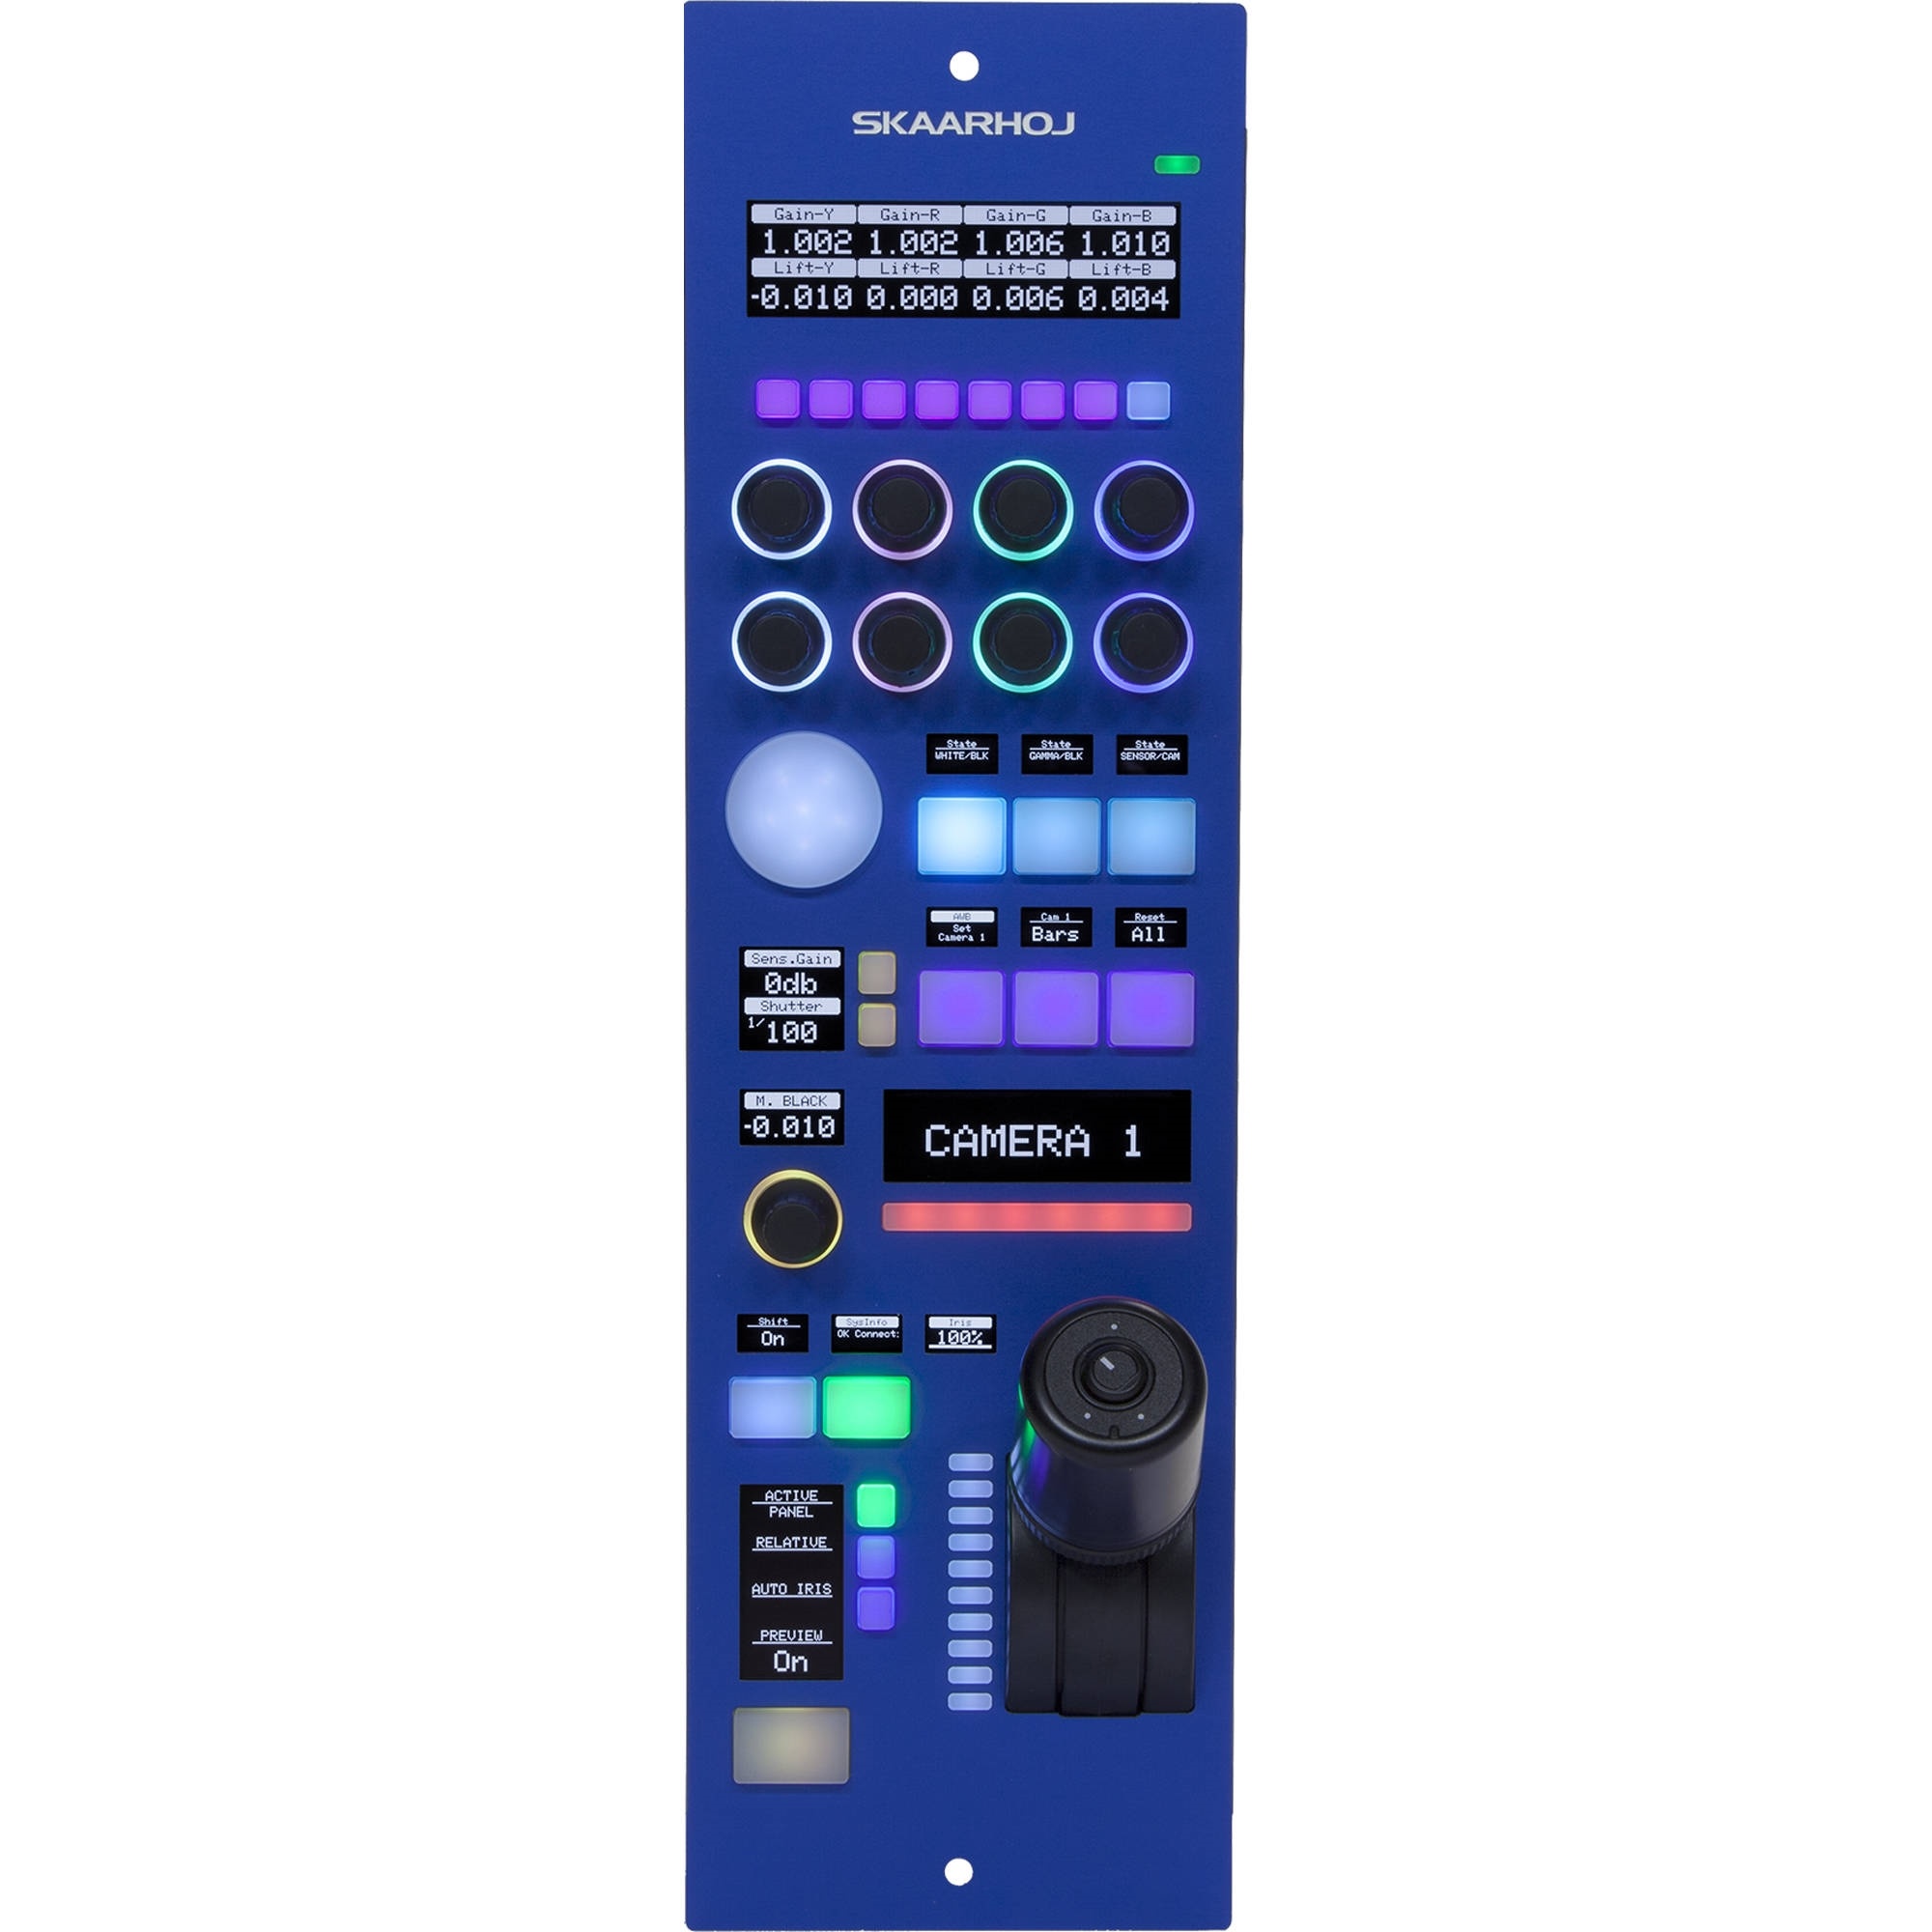 SKAARHOJ RCPv2 Remote Control Panel with Classic Iris Joystick & SDI I/O